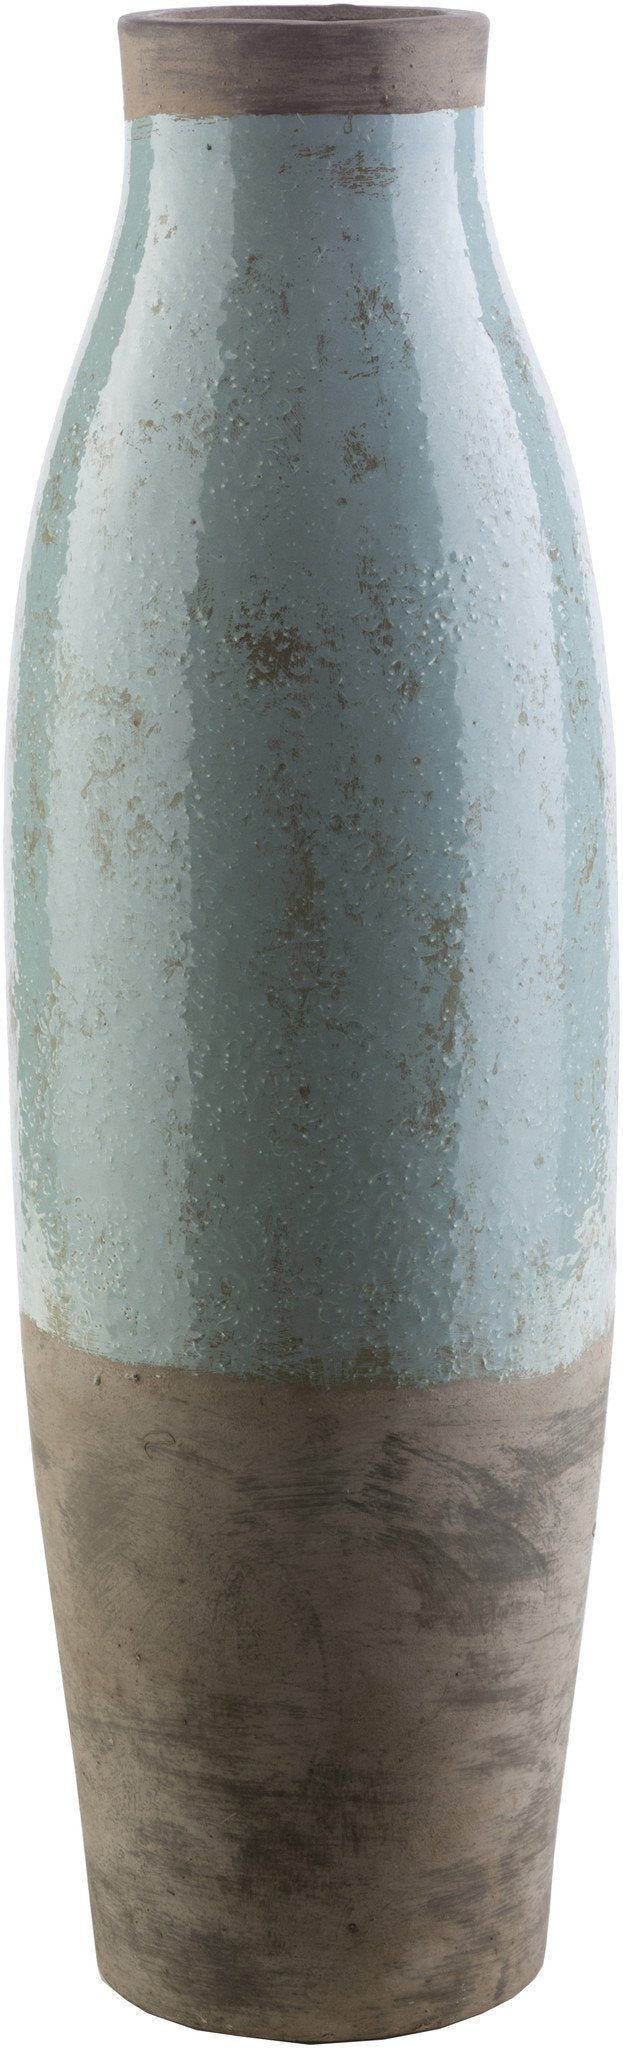 Large Leclair Vase